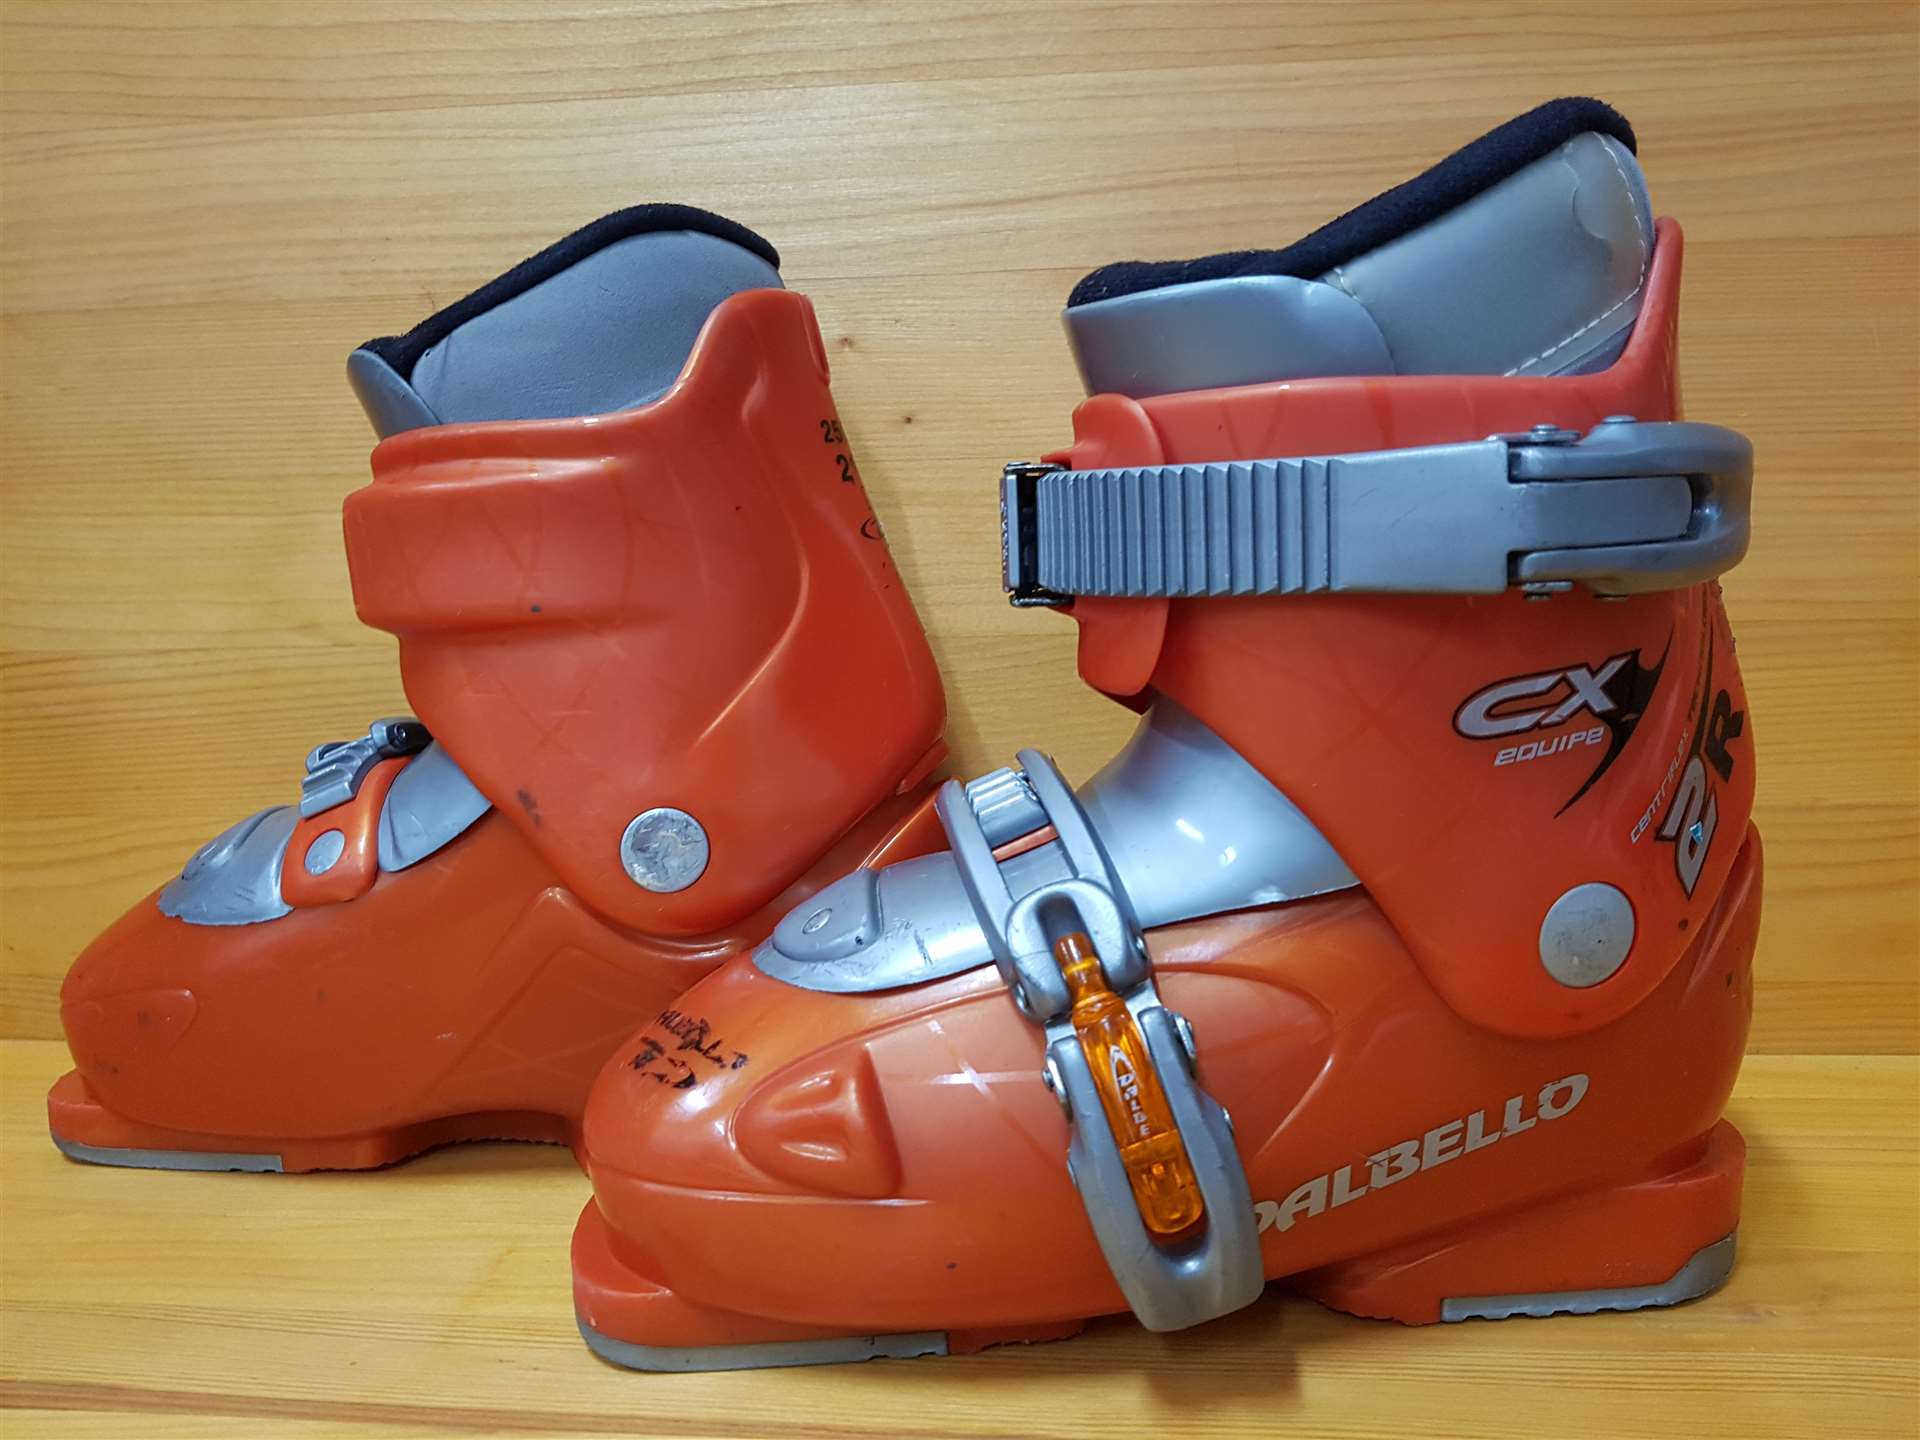 Bazárové lyžařské boty Dalbello R2 CX Equipe